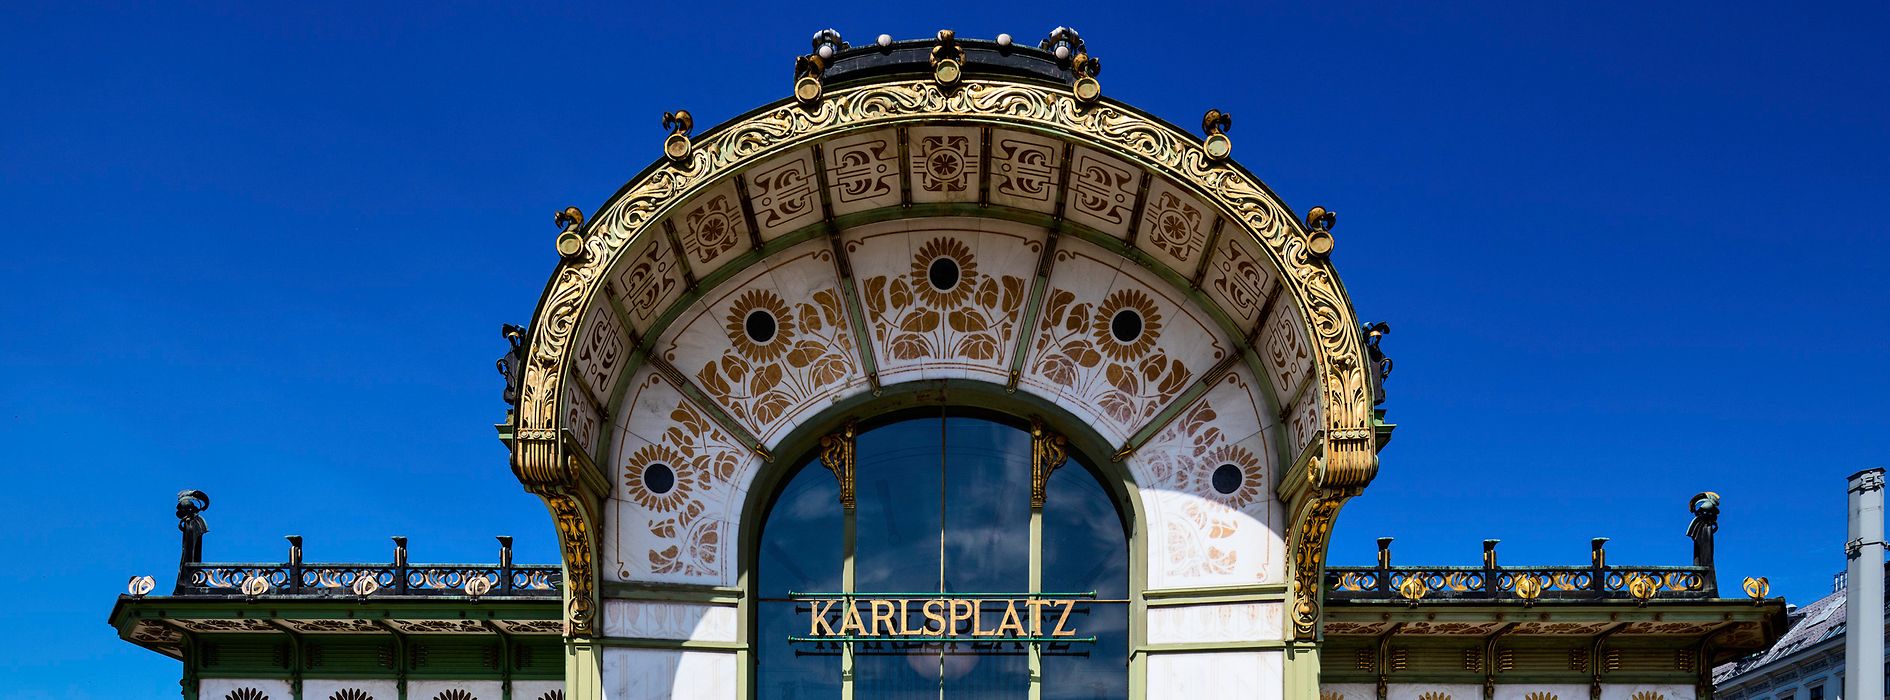 Pavillon Otto-Wagner sur Karlsplatz 